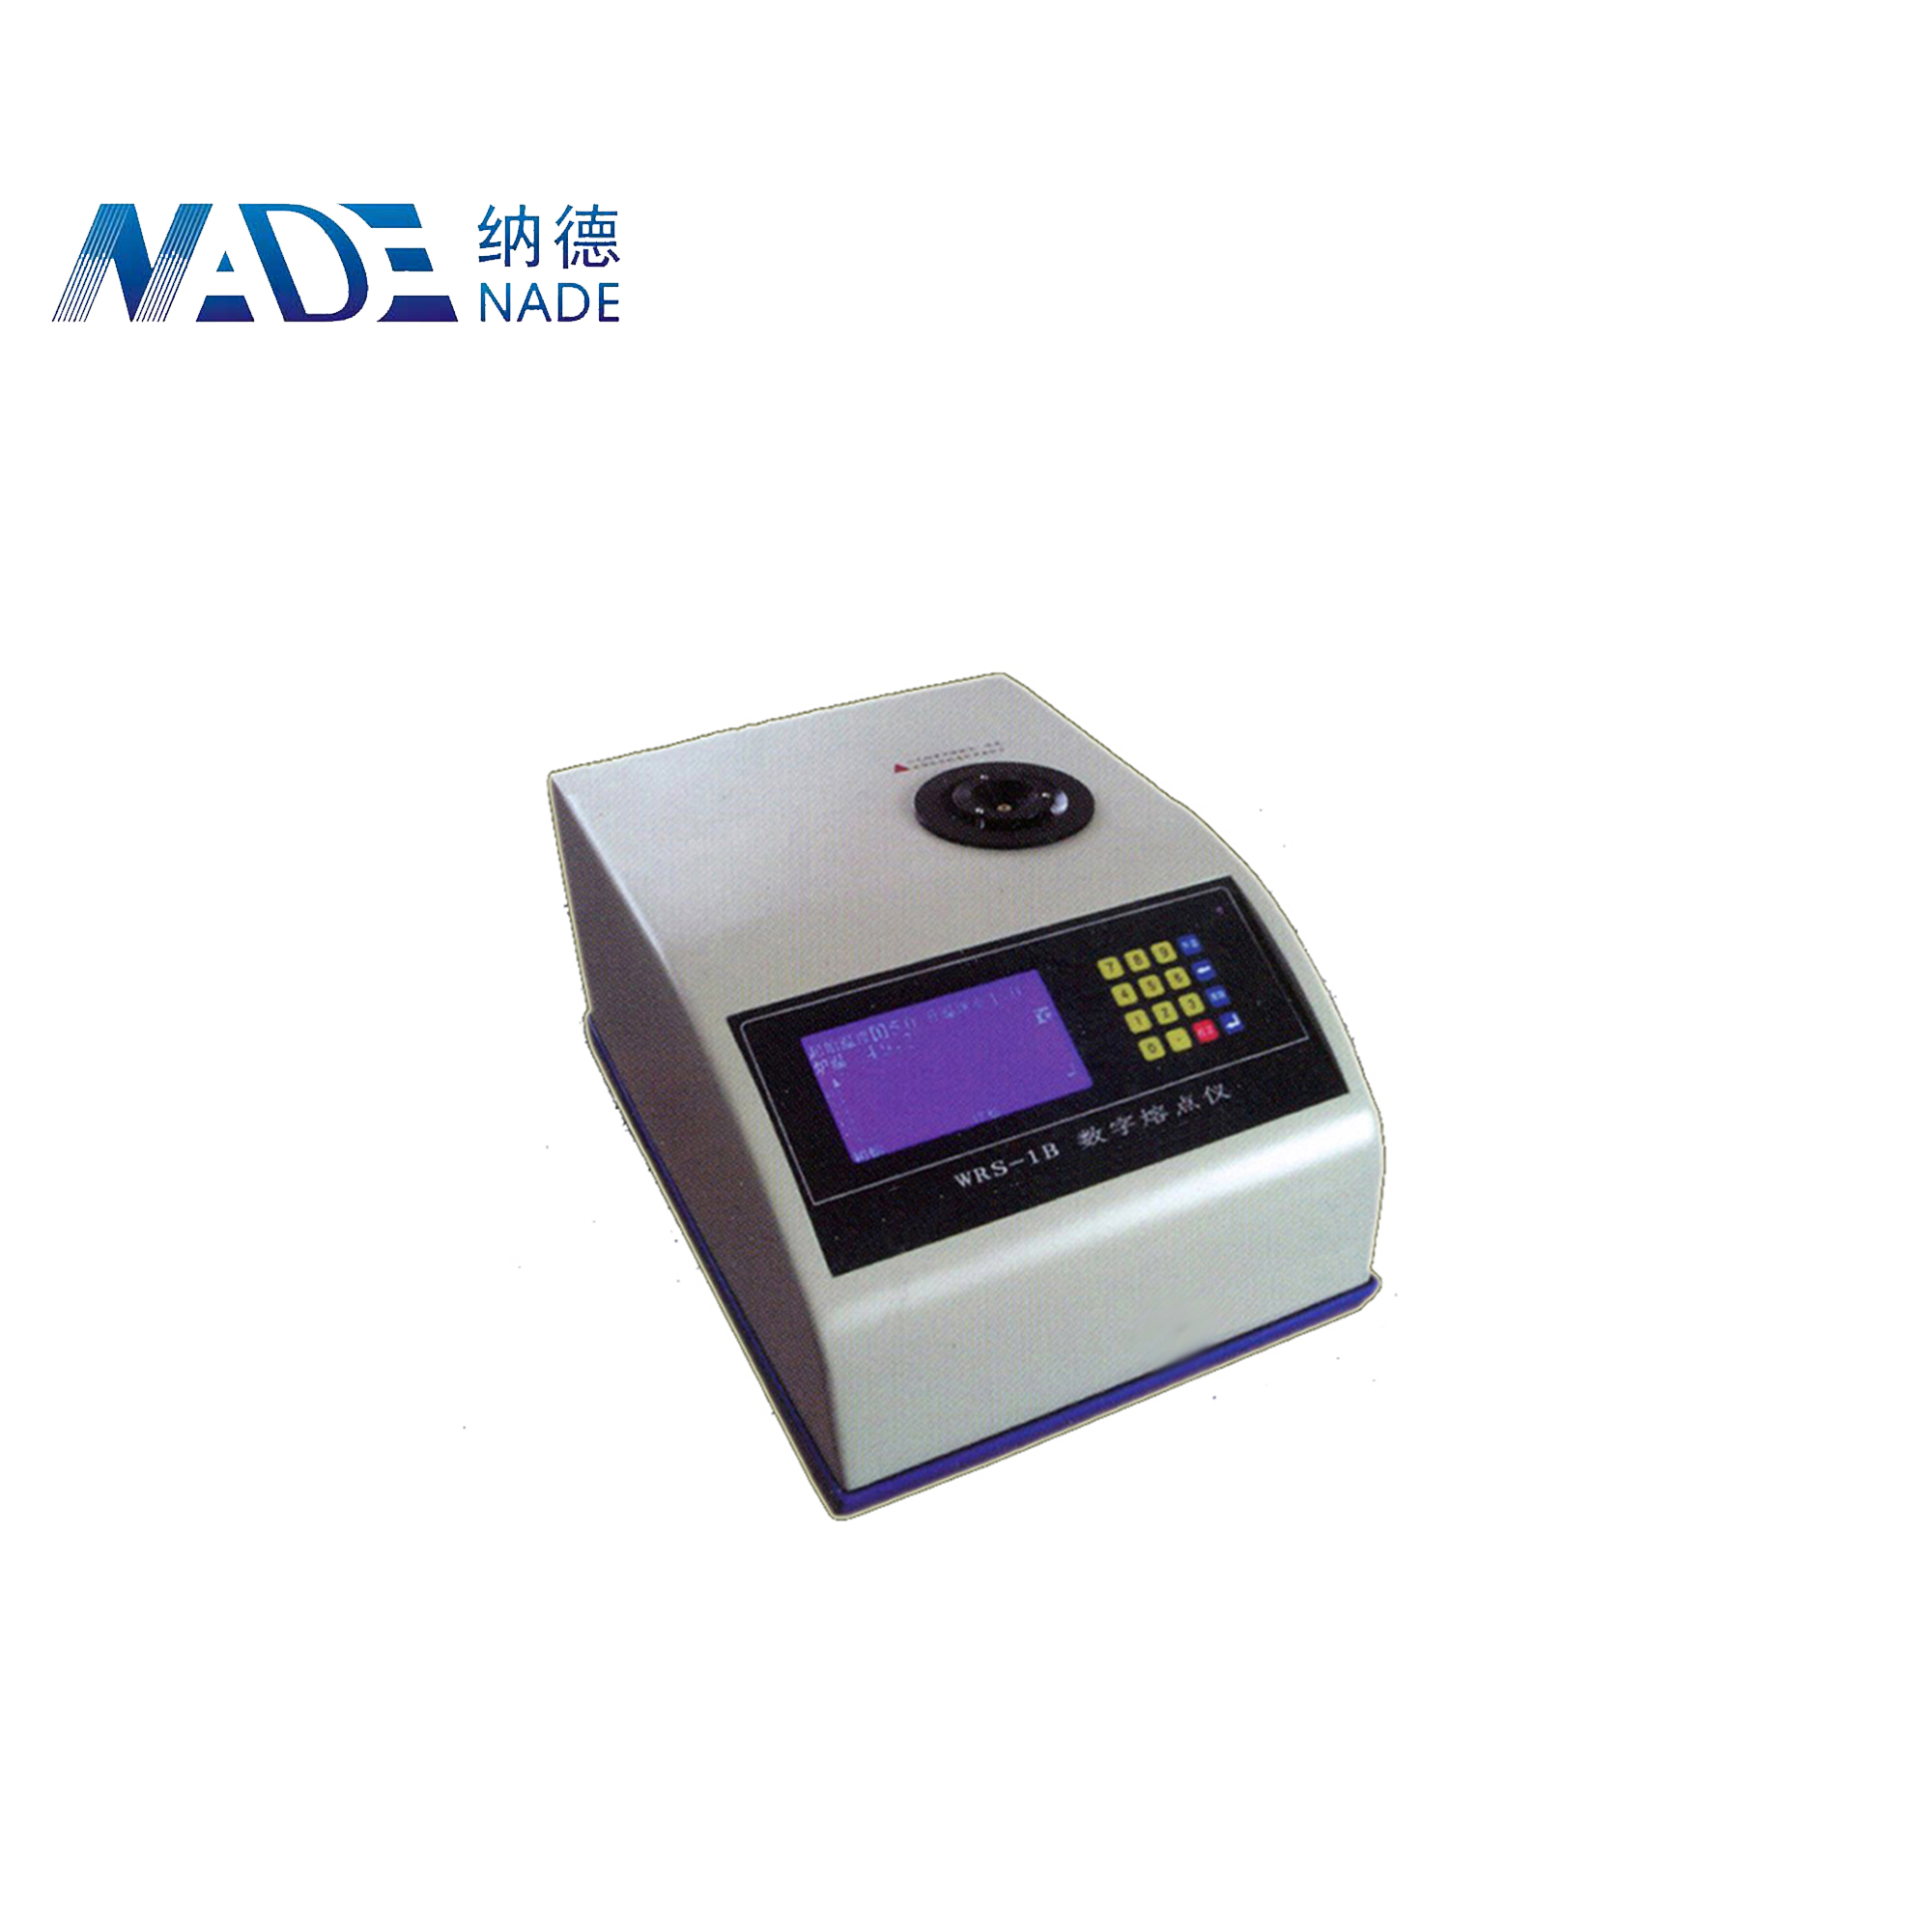 NADE WRS-1B laboratory Microprocessor melting point instrument/apparatus Room temp -300C